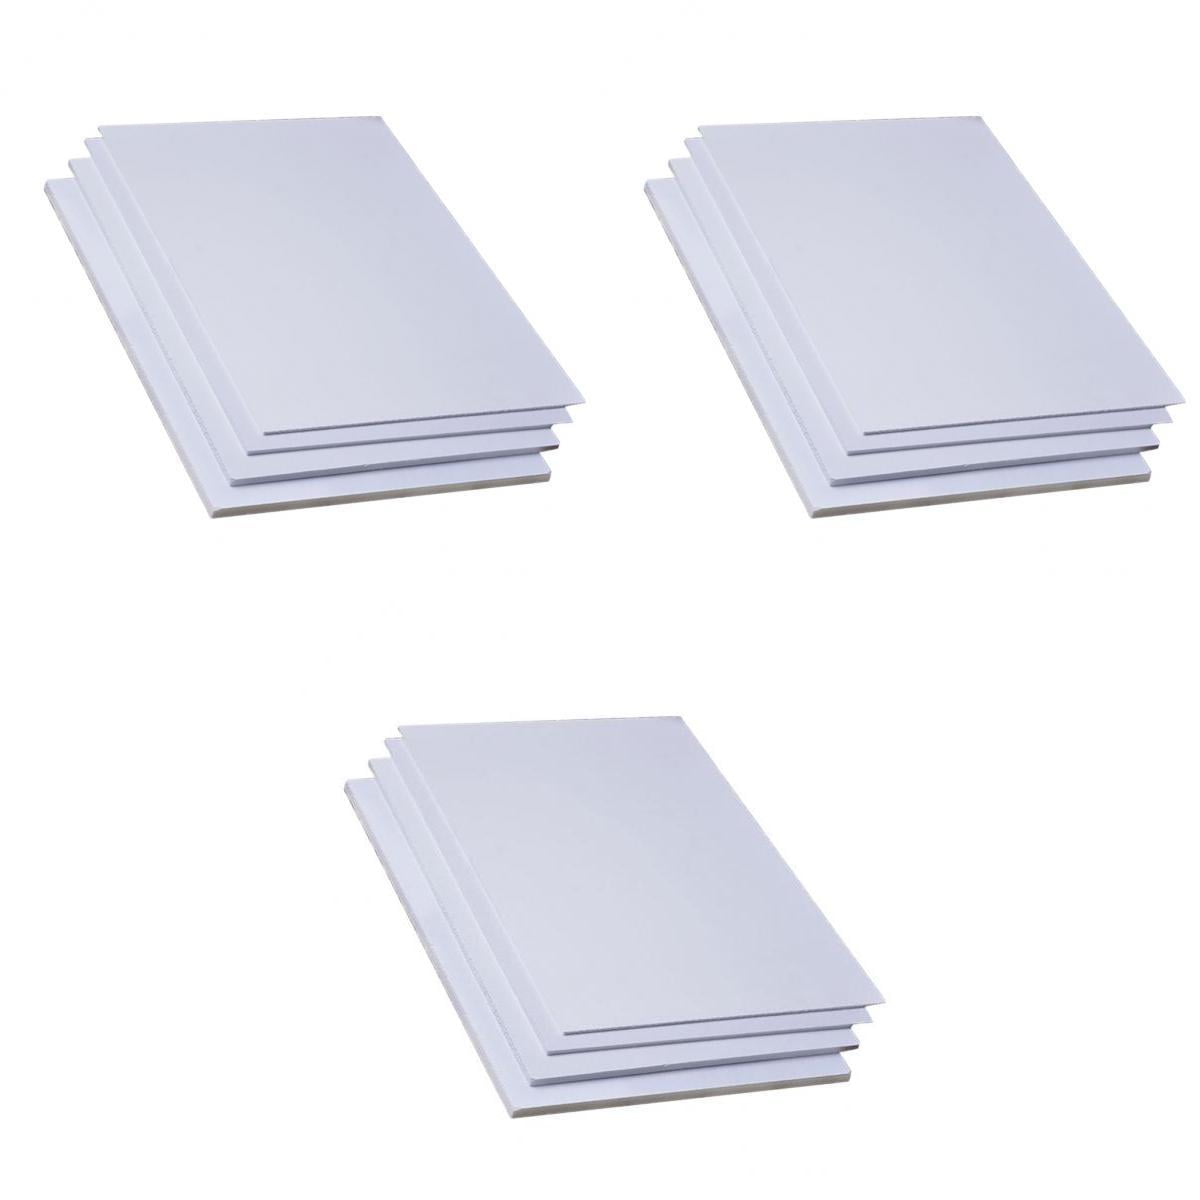 SQINAA Foam Board PVC Foam Sheet 400x600mm White for DIY Crafts Format Presentation Model Making Pack of 5,3mm 